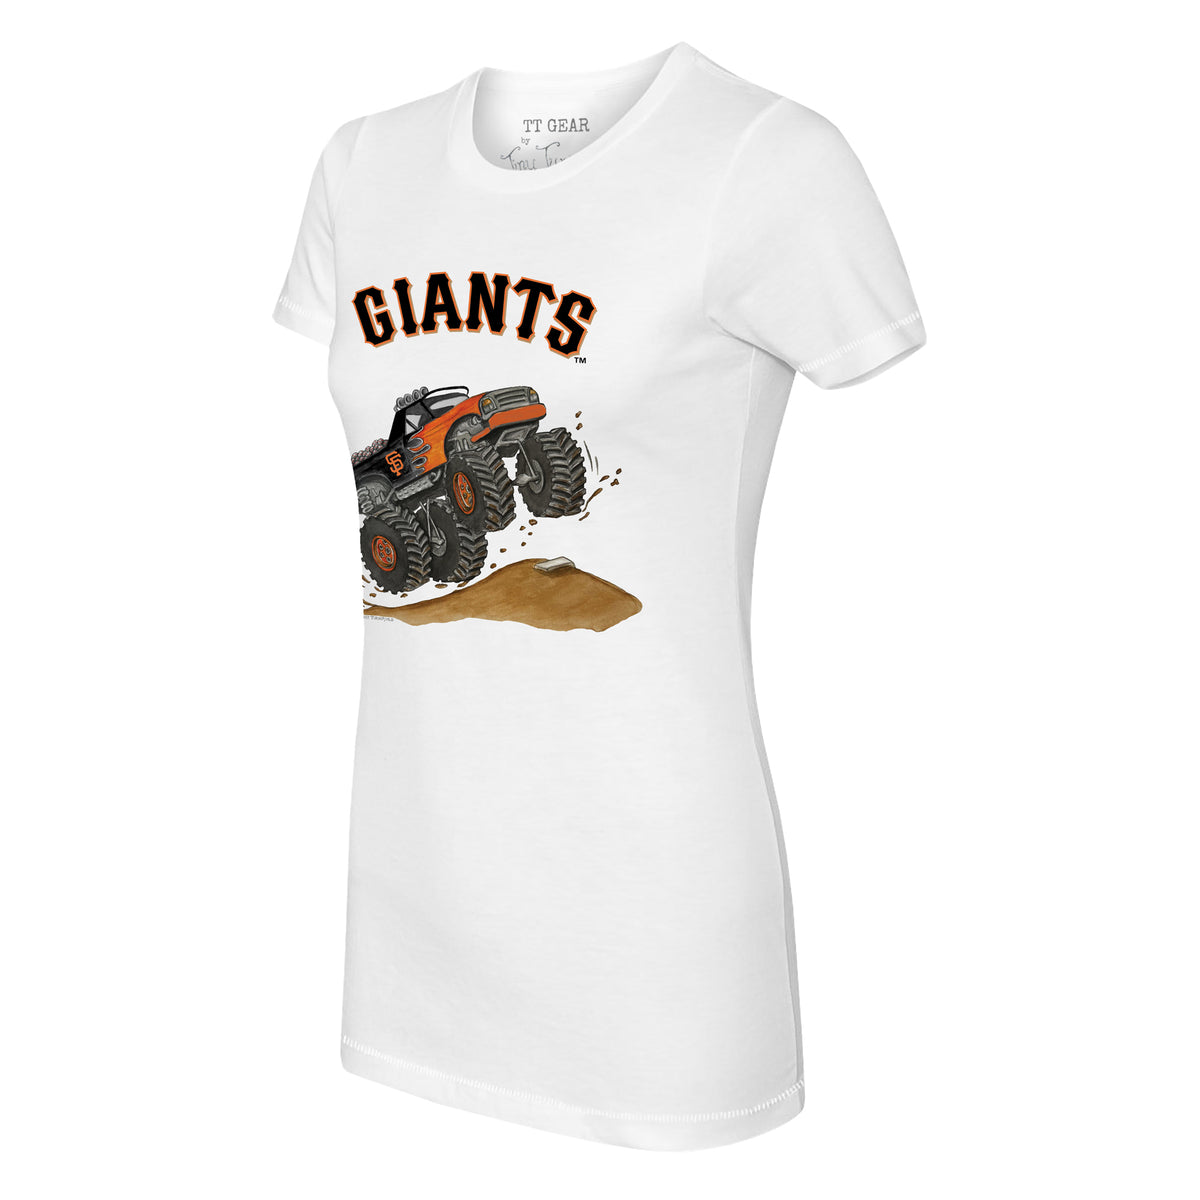 San Francisco Giants Monster Truck Tee Shirt